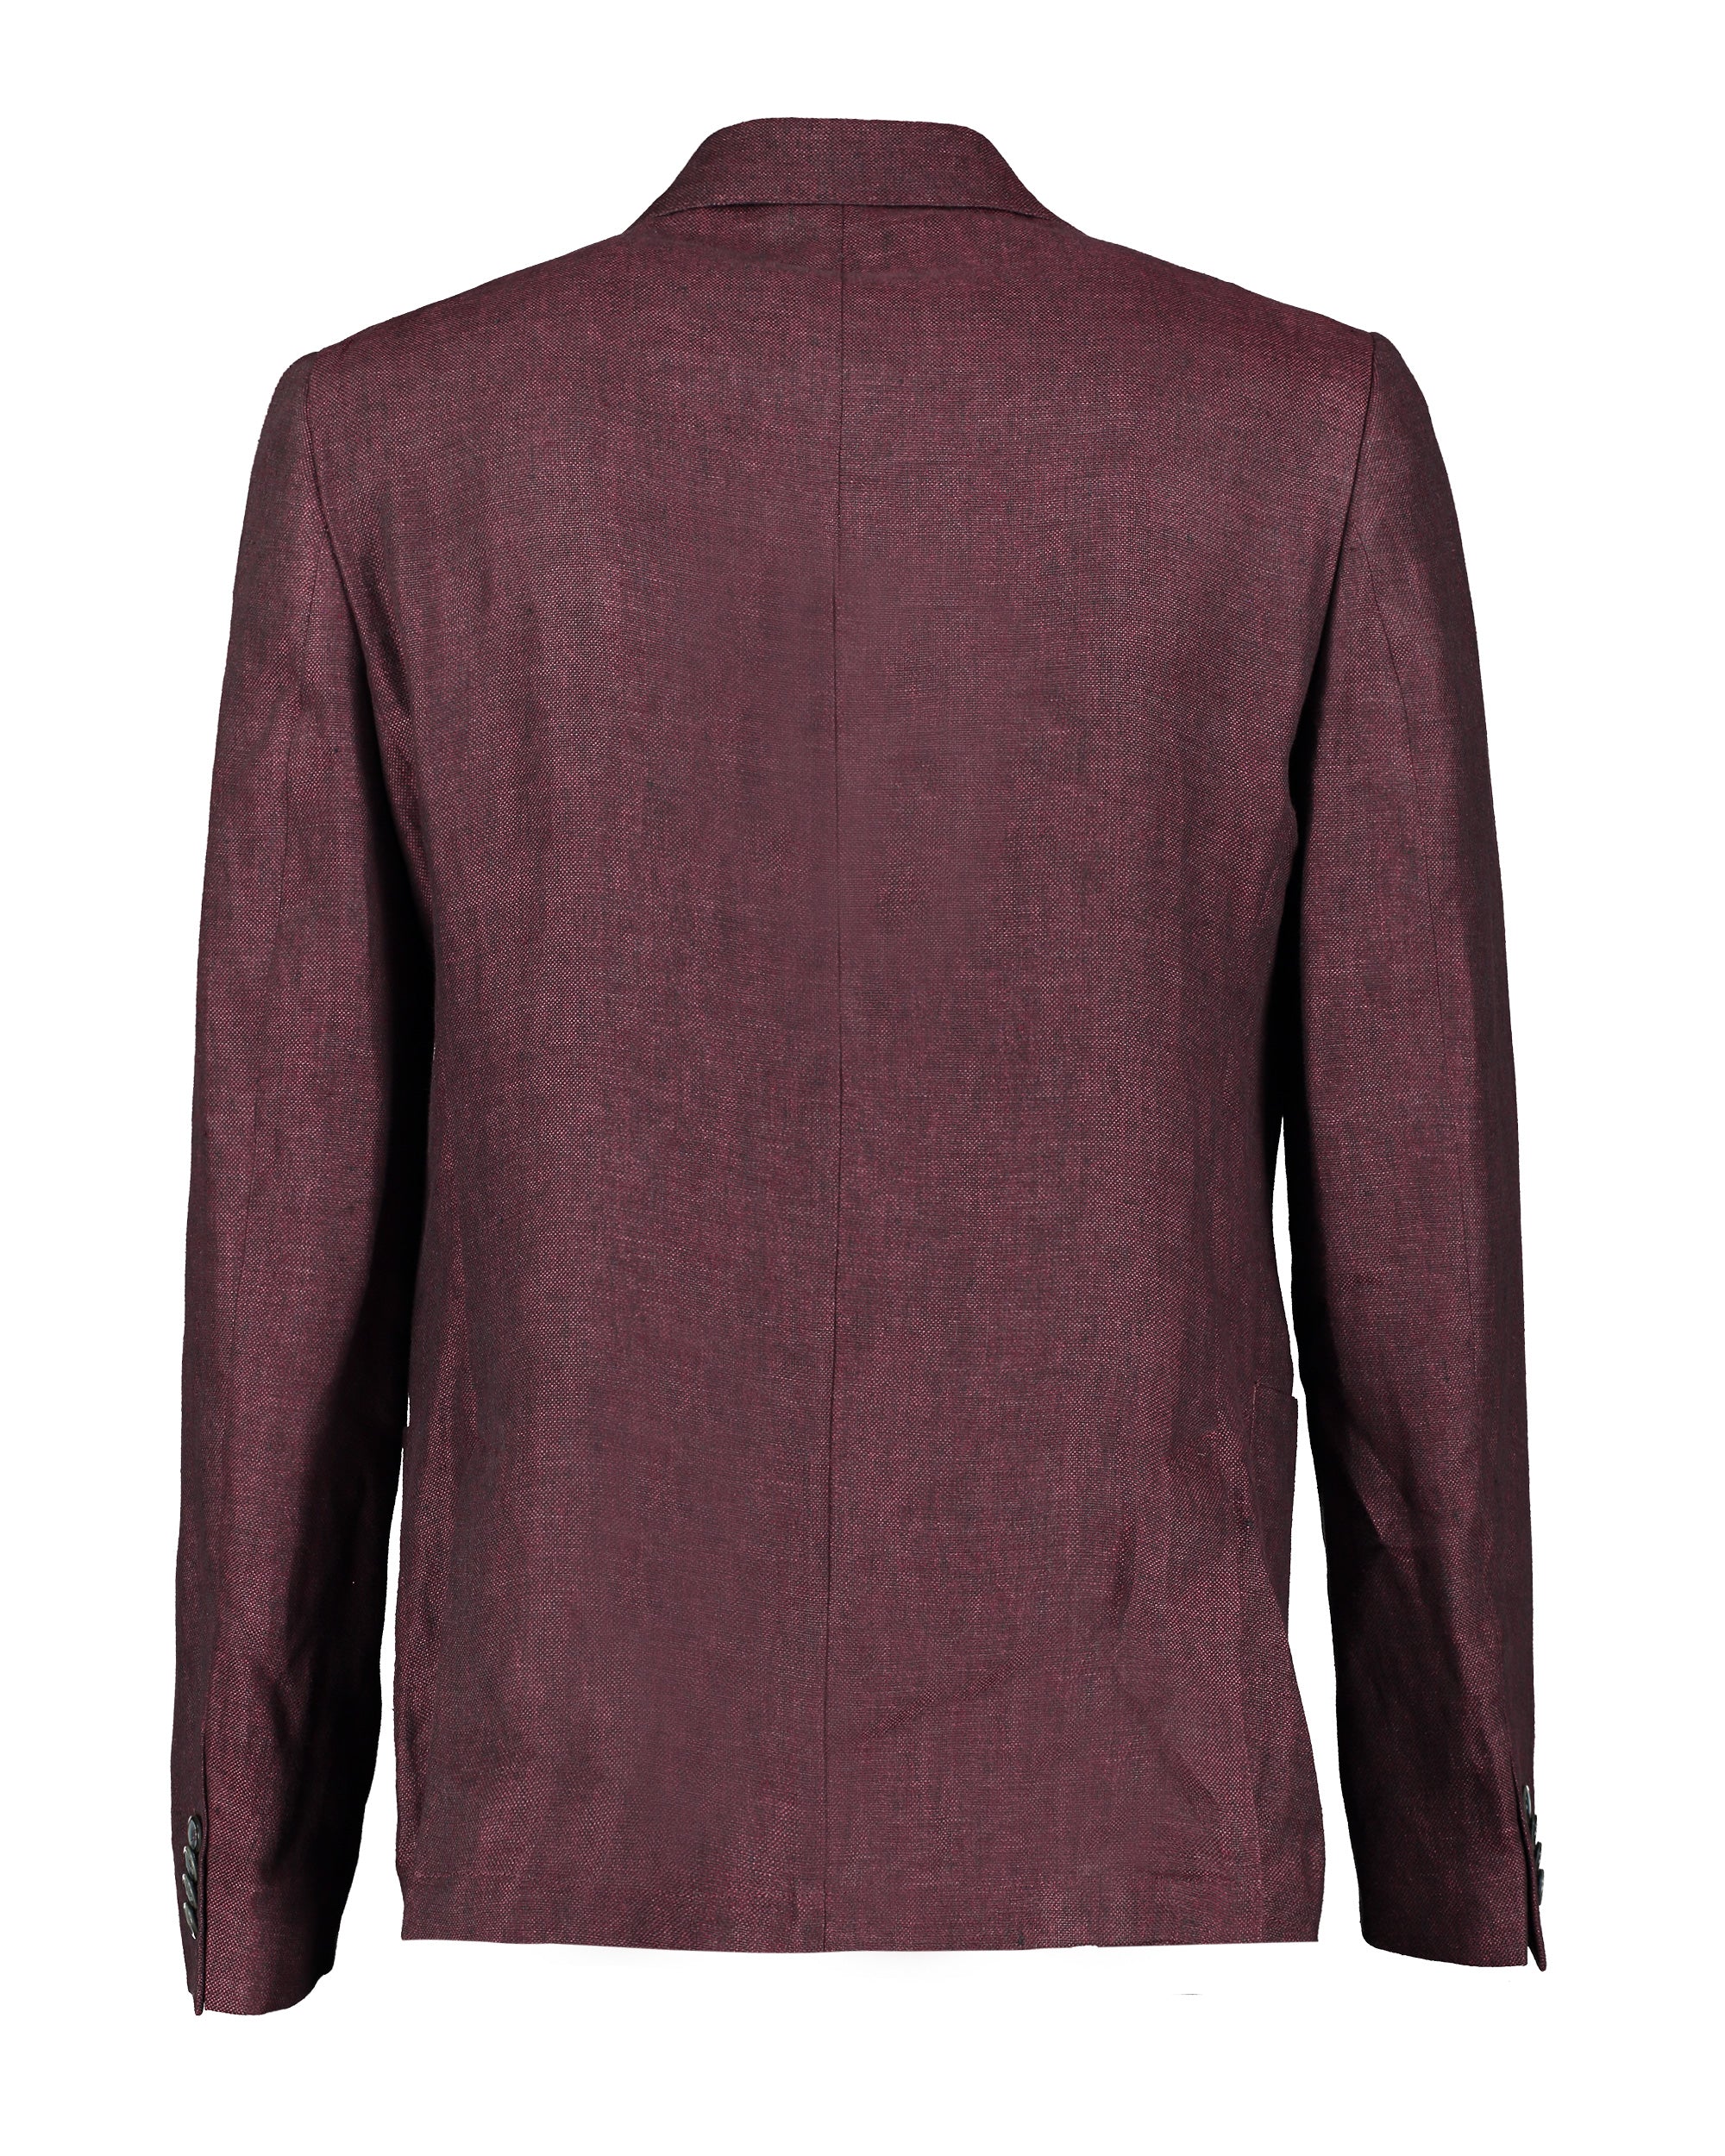 Ness Burgundy Linen Jacket